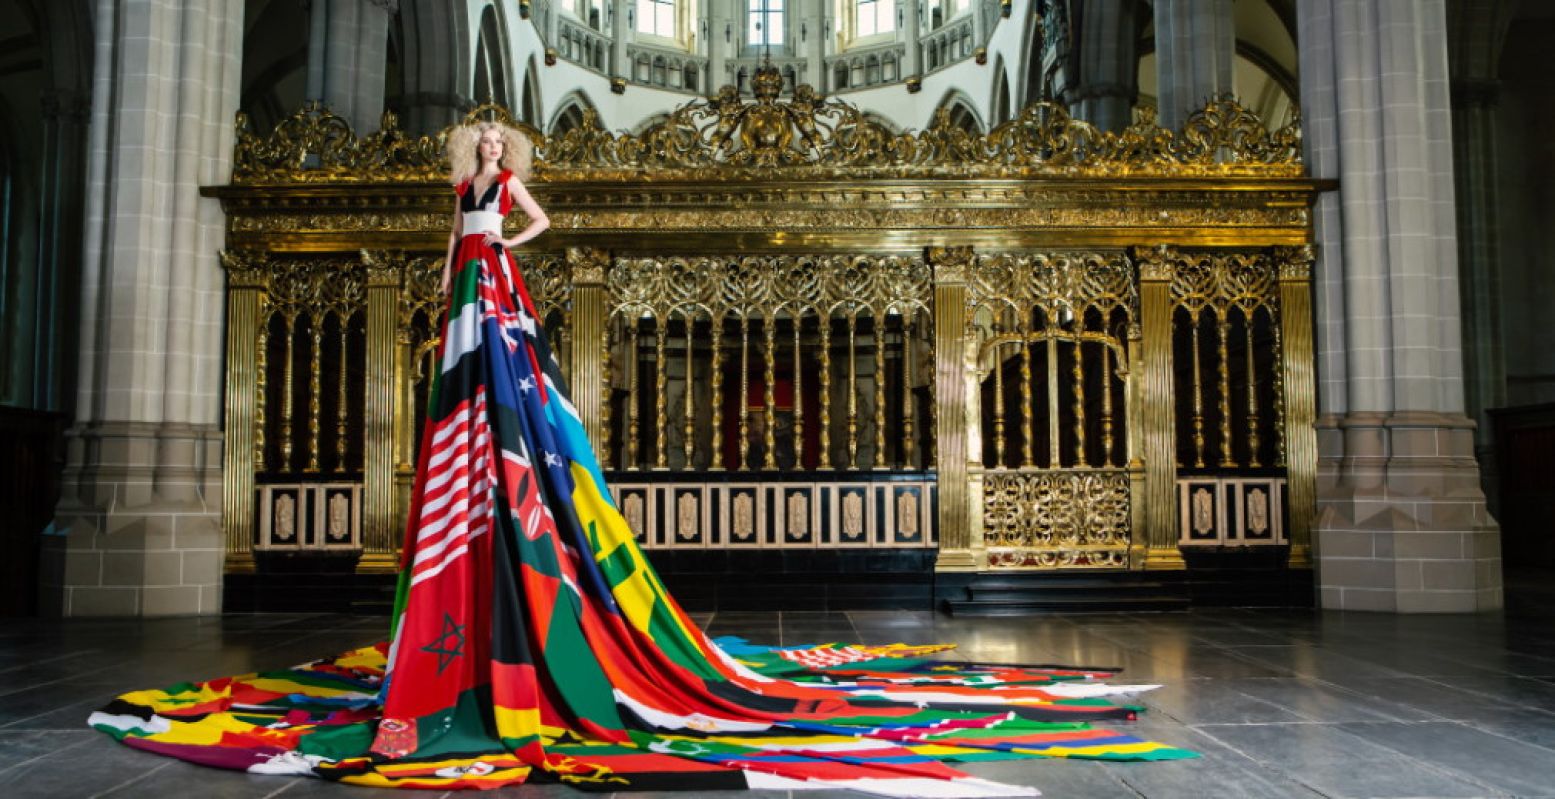 Amsterdam Rainbow Dress. Foto: Dario & Misja, model Valentijn de Hingh